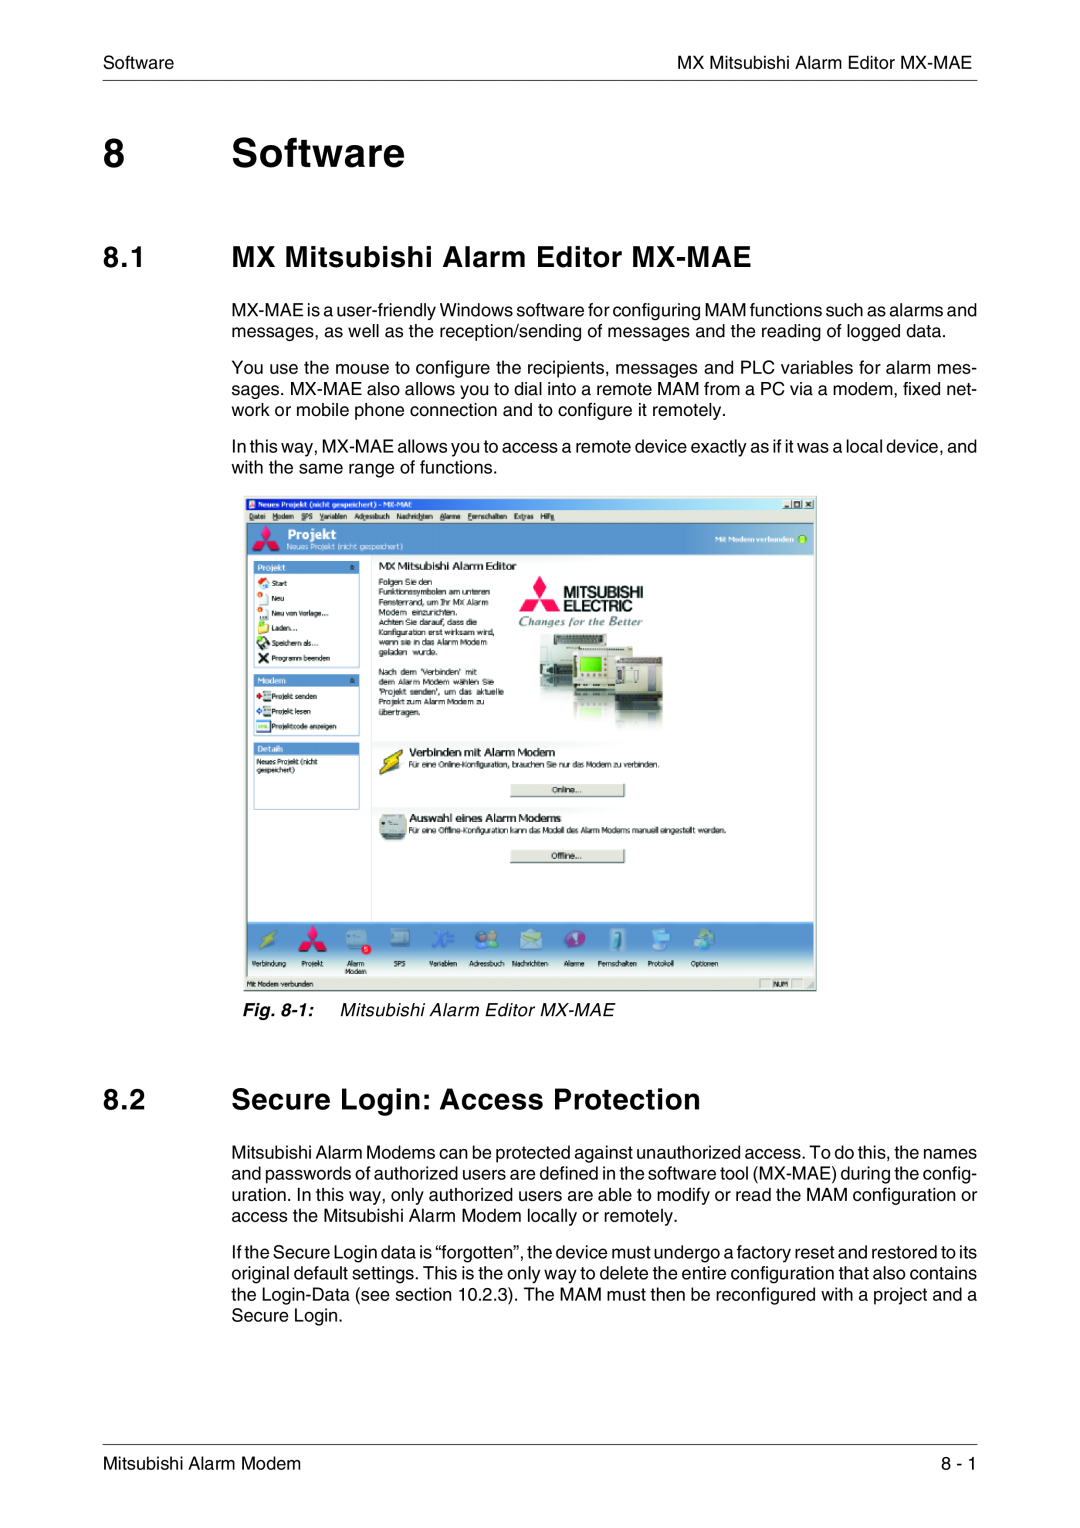 Mitsubishi Electronics MAM-AM20, MAM-AM6 Software, MX Mitsubishi Alarm Editor MX-MAE, Secure Login Access Protection 